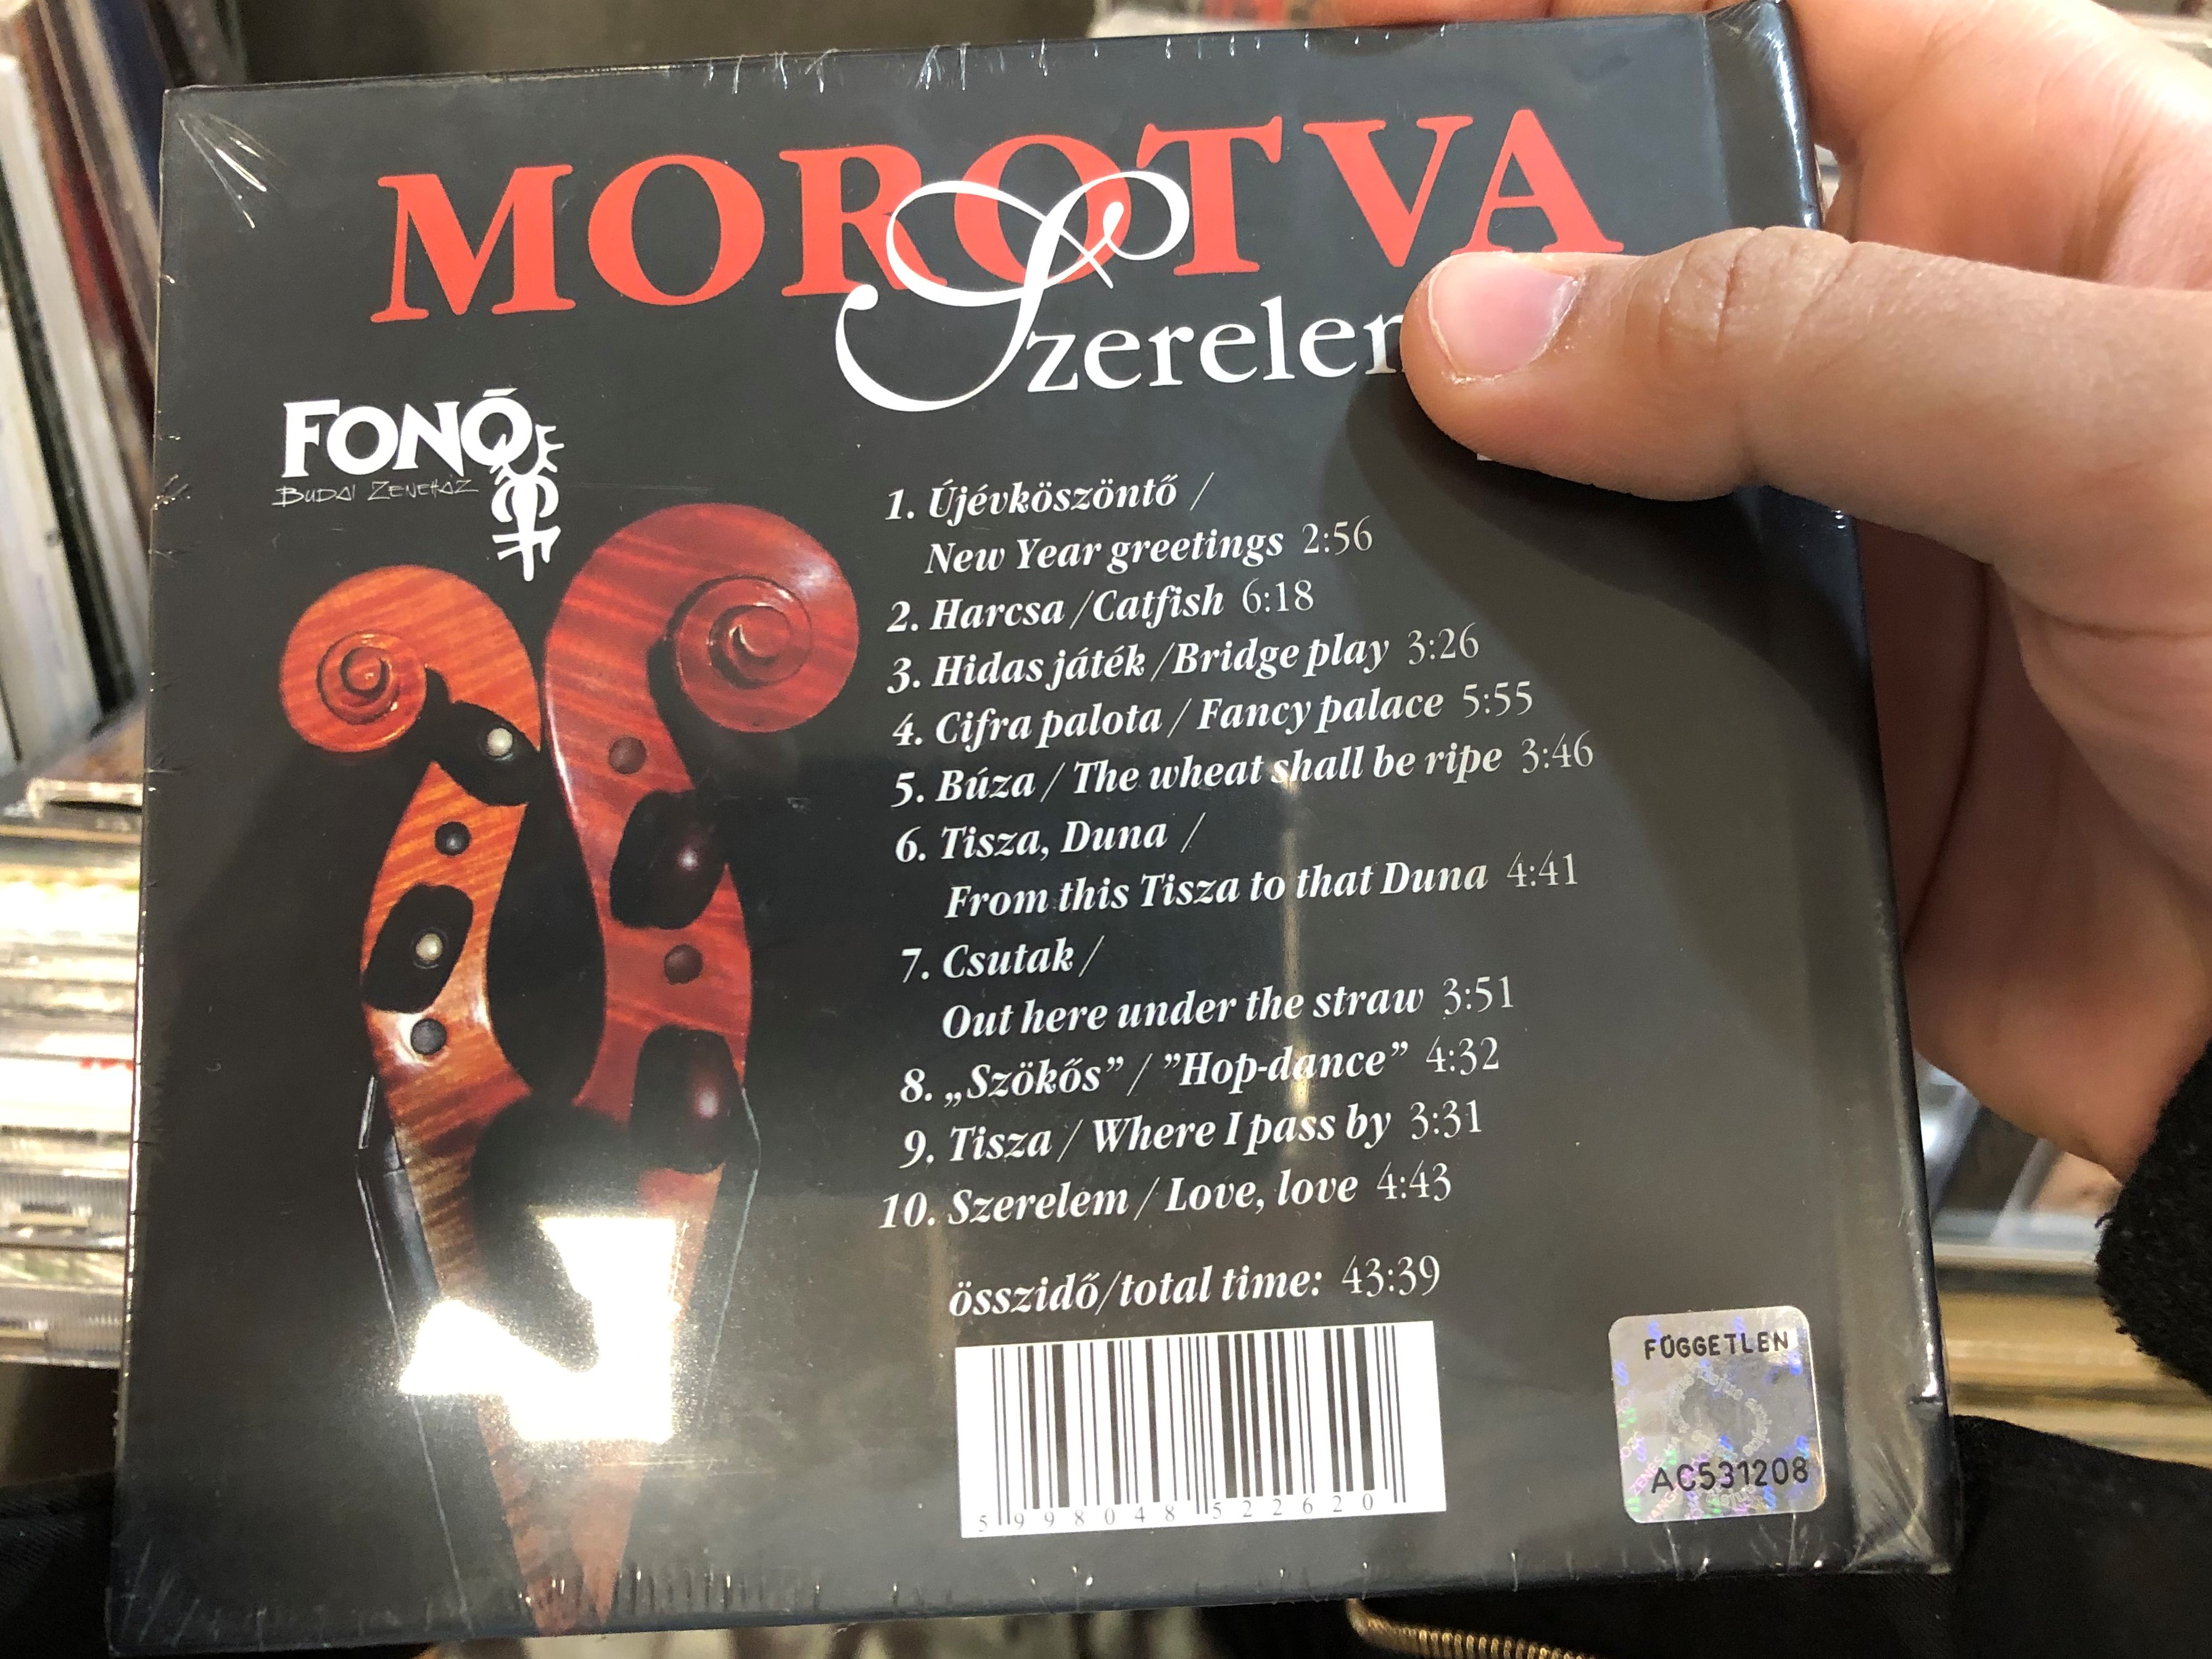 morotva-szerelem-love-magyar-n-pzenei-feldolgoz-sok-hungarian-folk-music-arrangeds-fon-budai-zeneh-z-audio-cd-2006-fa-226-2-2-.jpg